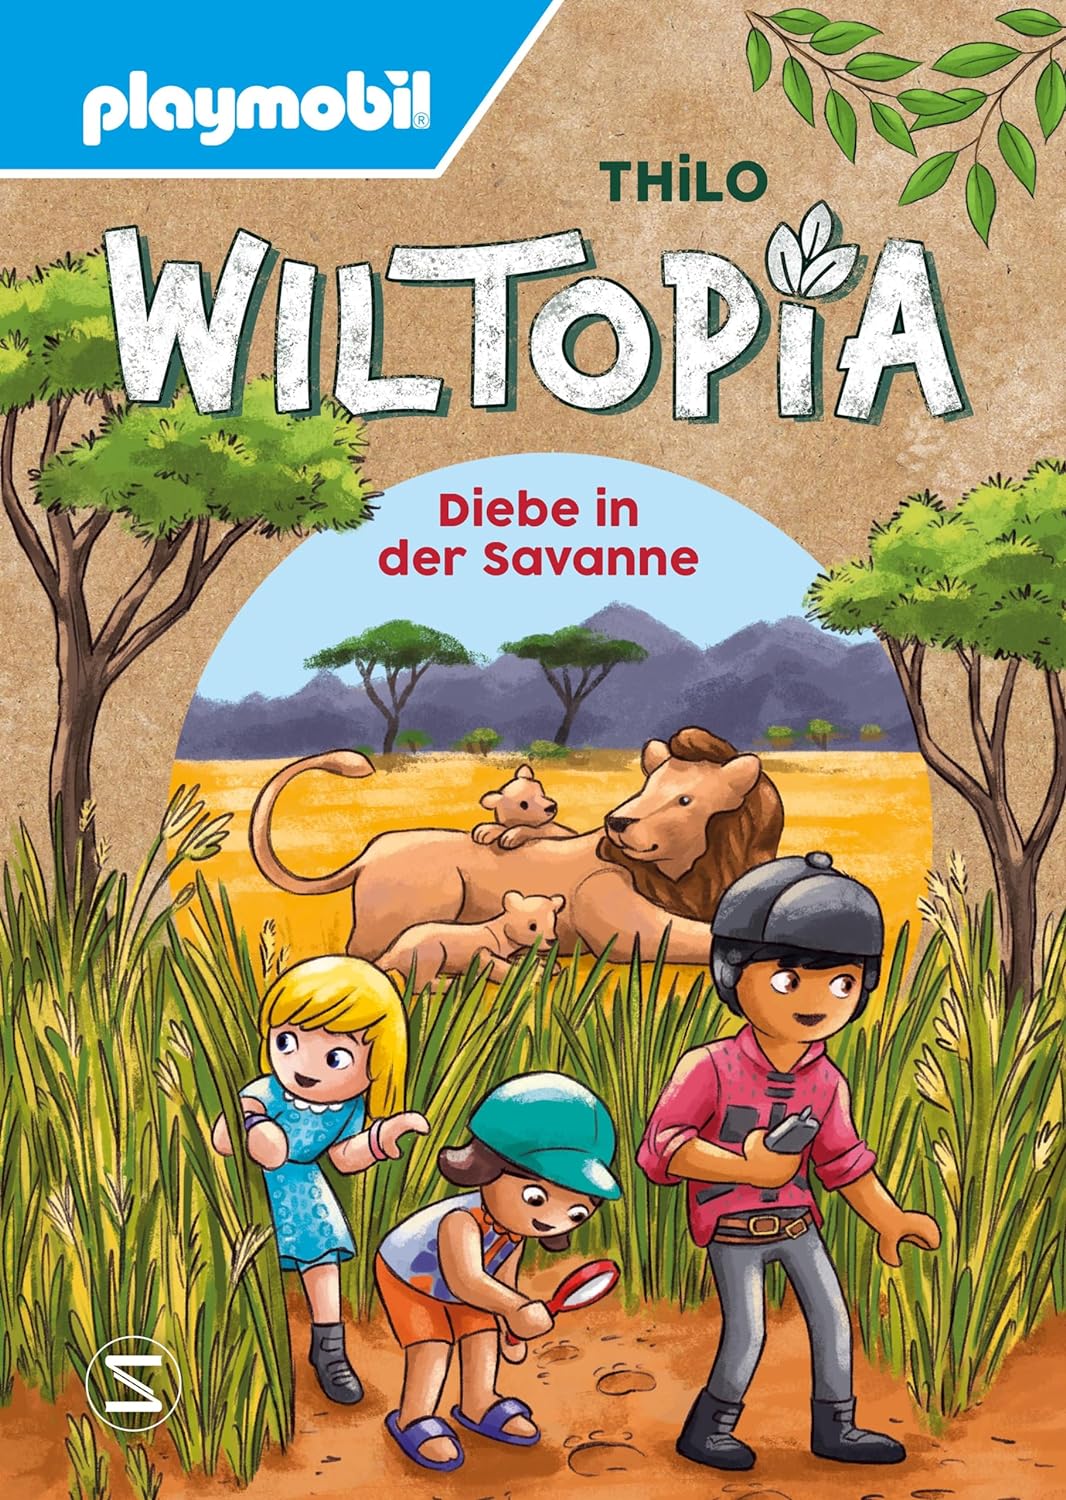 PLAYMOBIL Wiltopia: Diebe in der Savanne